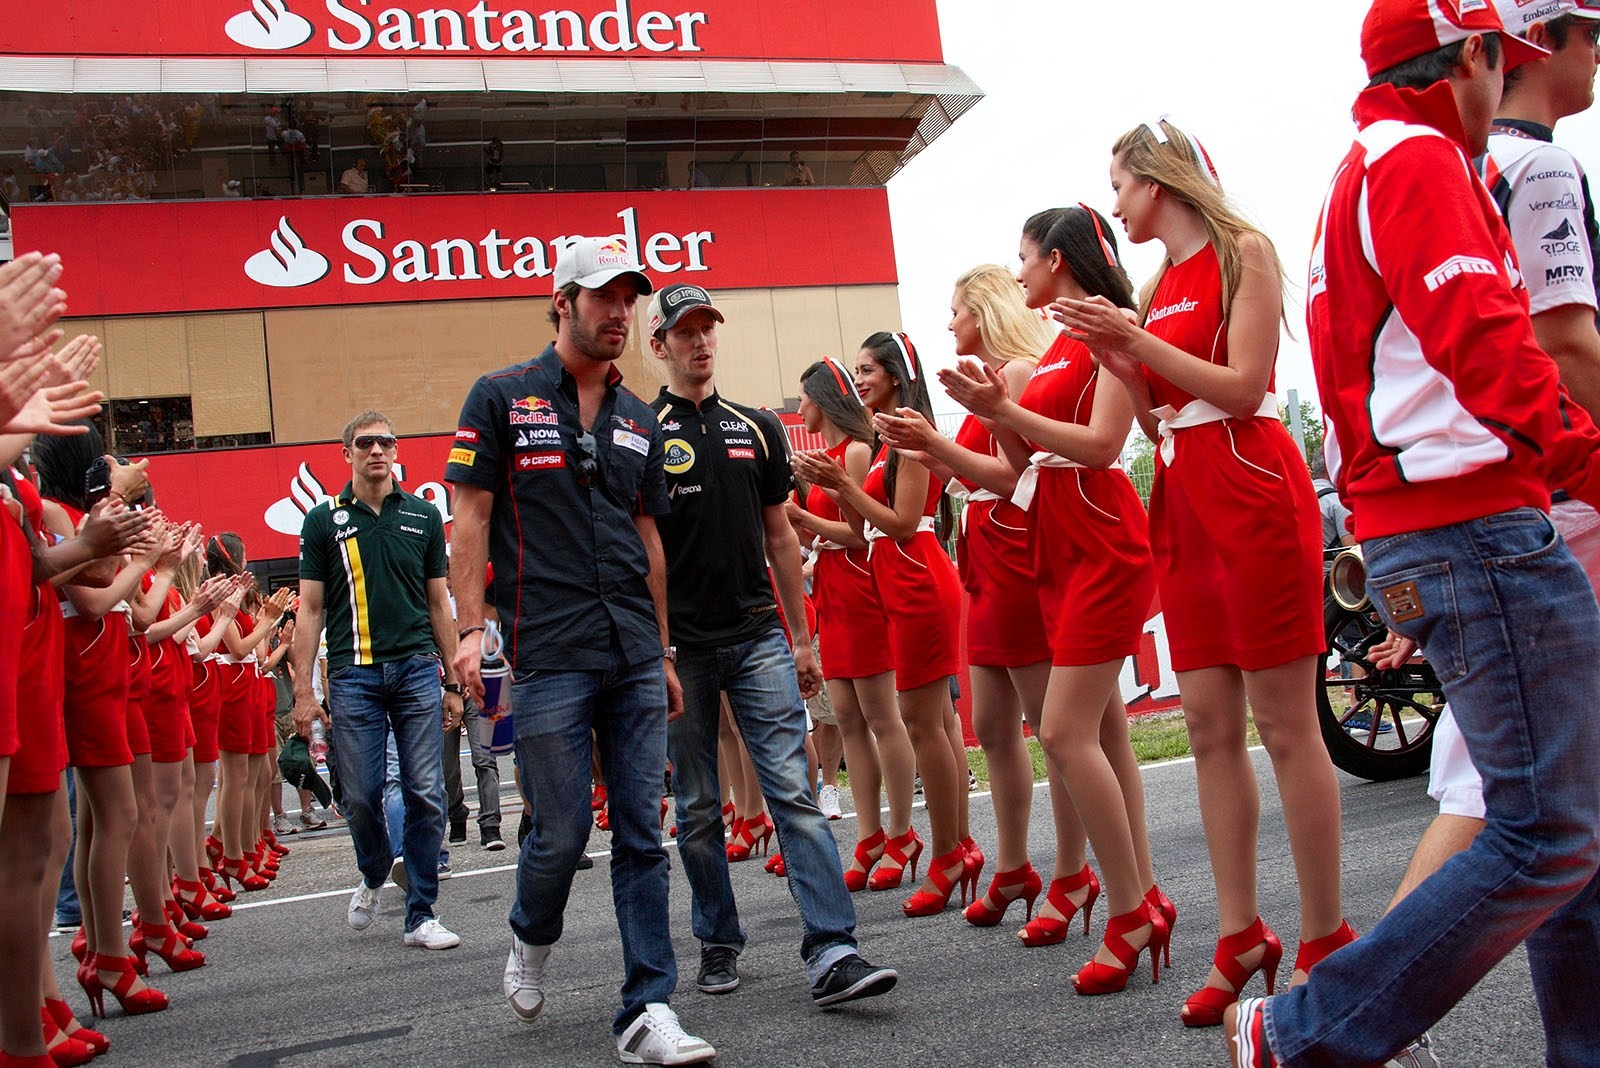 Romain Grosjean, Jean Eric Vergne and grid girls at Barcelona, Spain, in 2012.